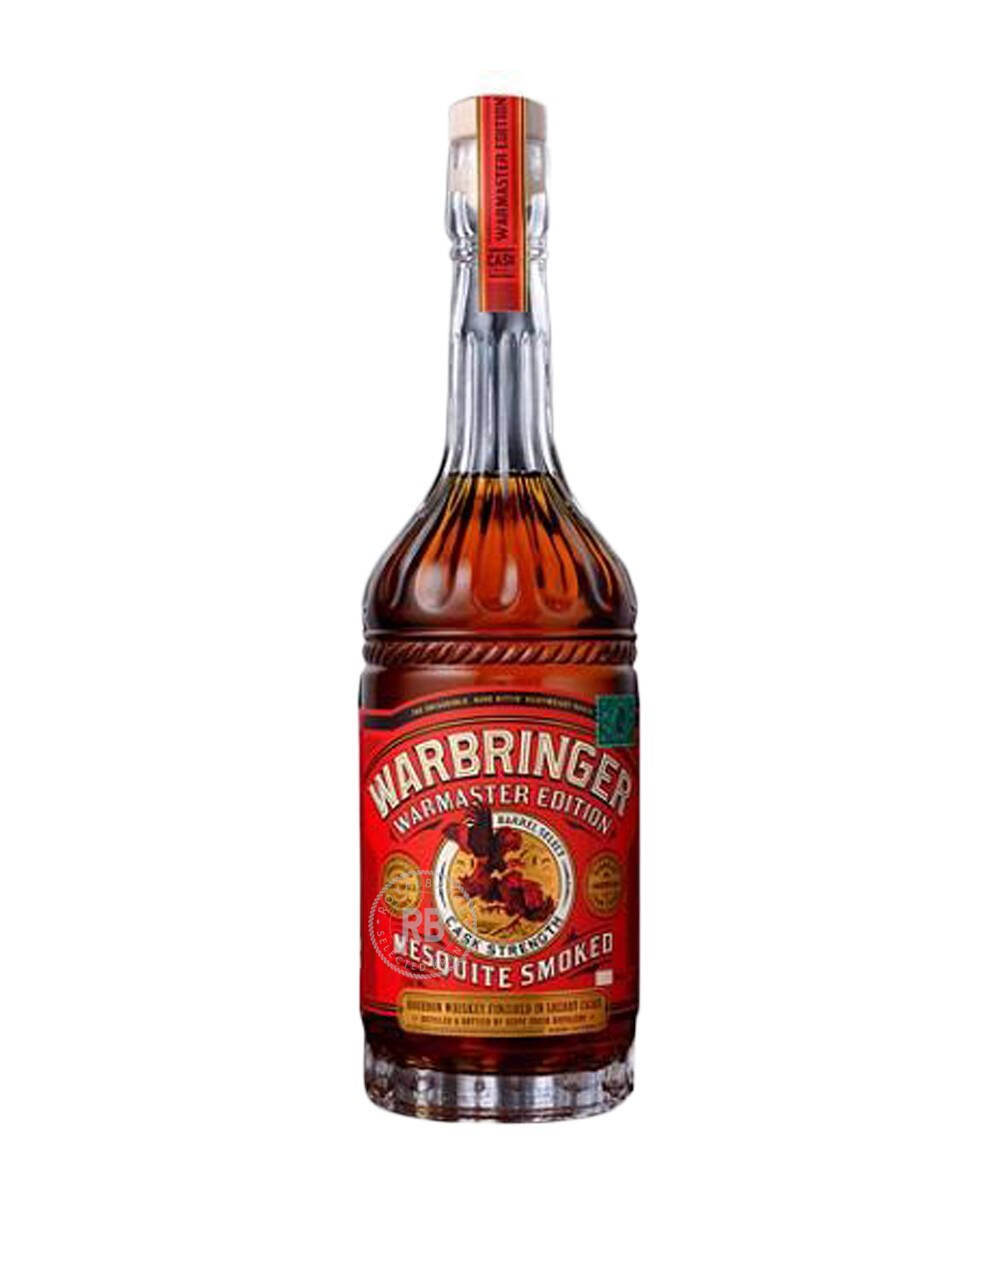 Warbringer Warmaster Edition Mesquite Smoked Southwest Bourbon Whiskey